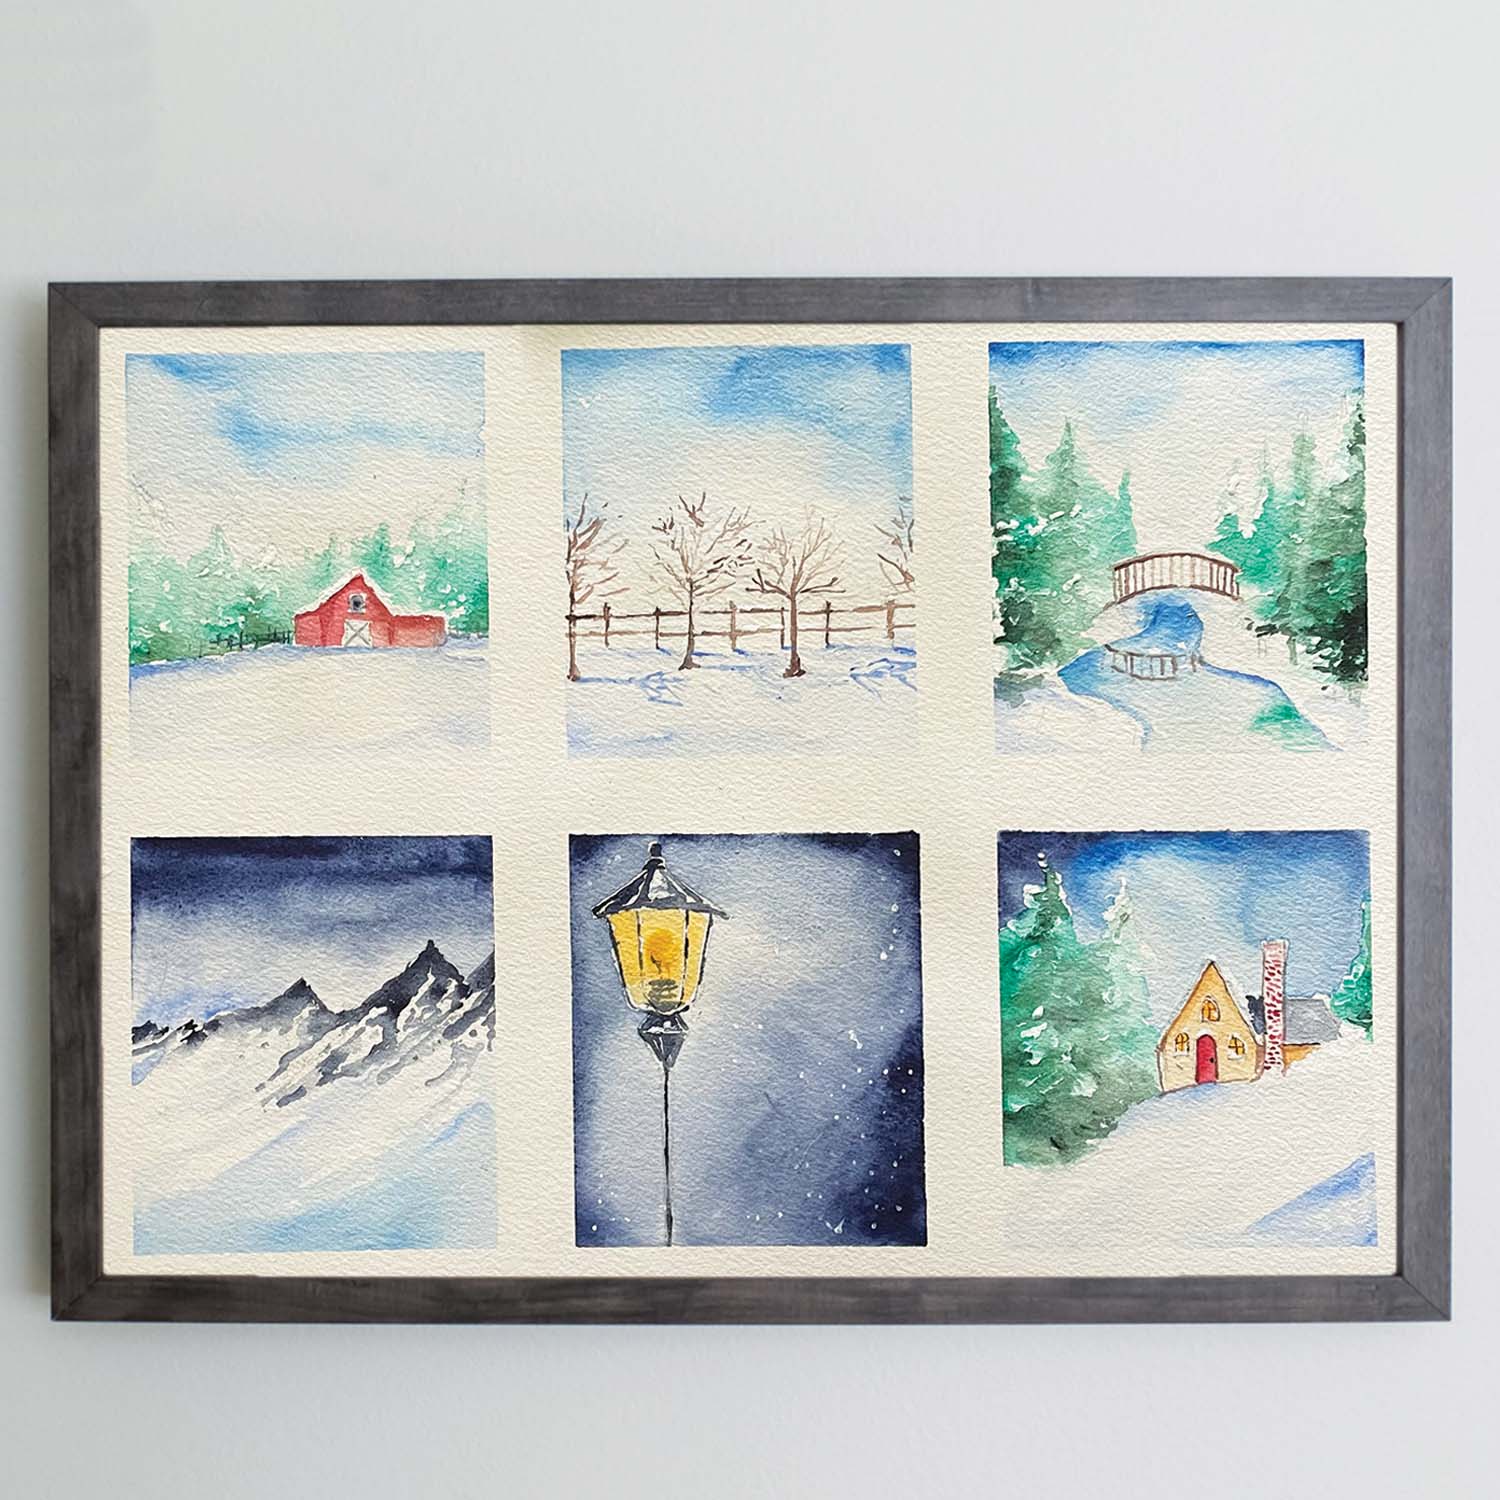 Watercolor of 6 winter scenes in gray frame